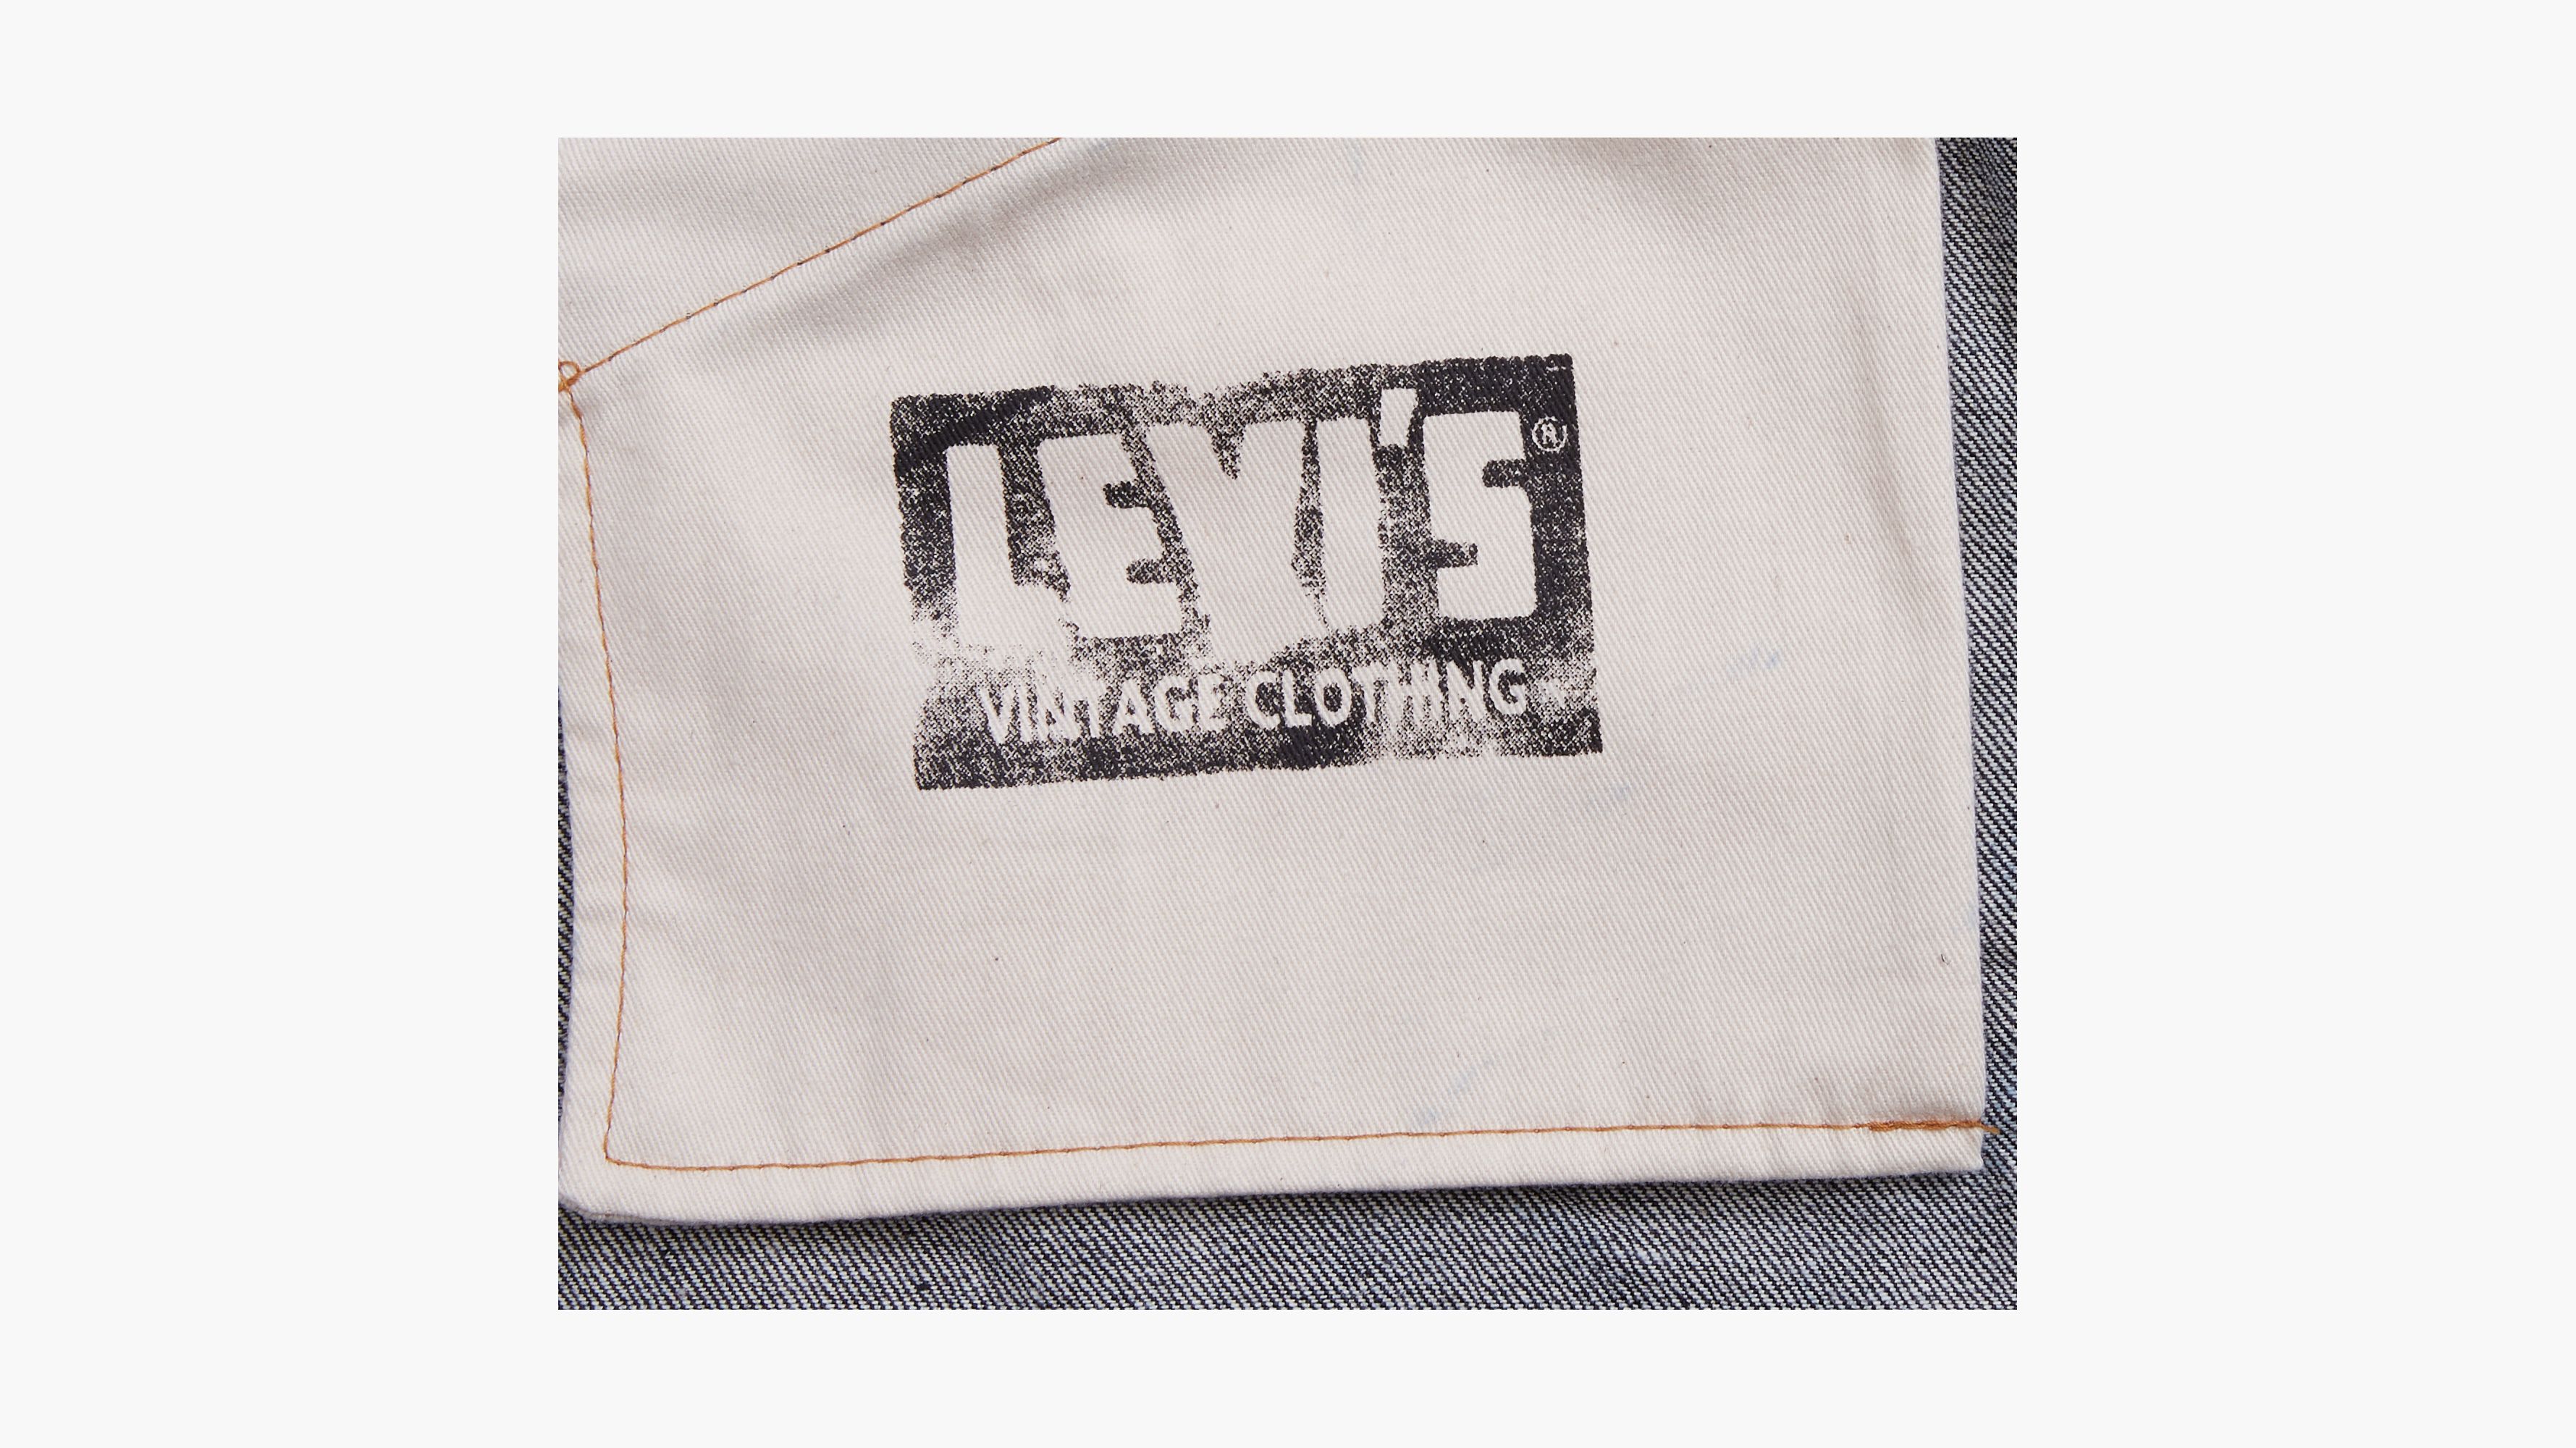 Levi's 1967 505 Regular Fit Men's Jeans - Rigid 34 x 32